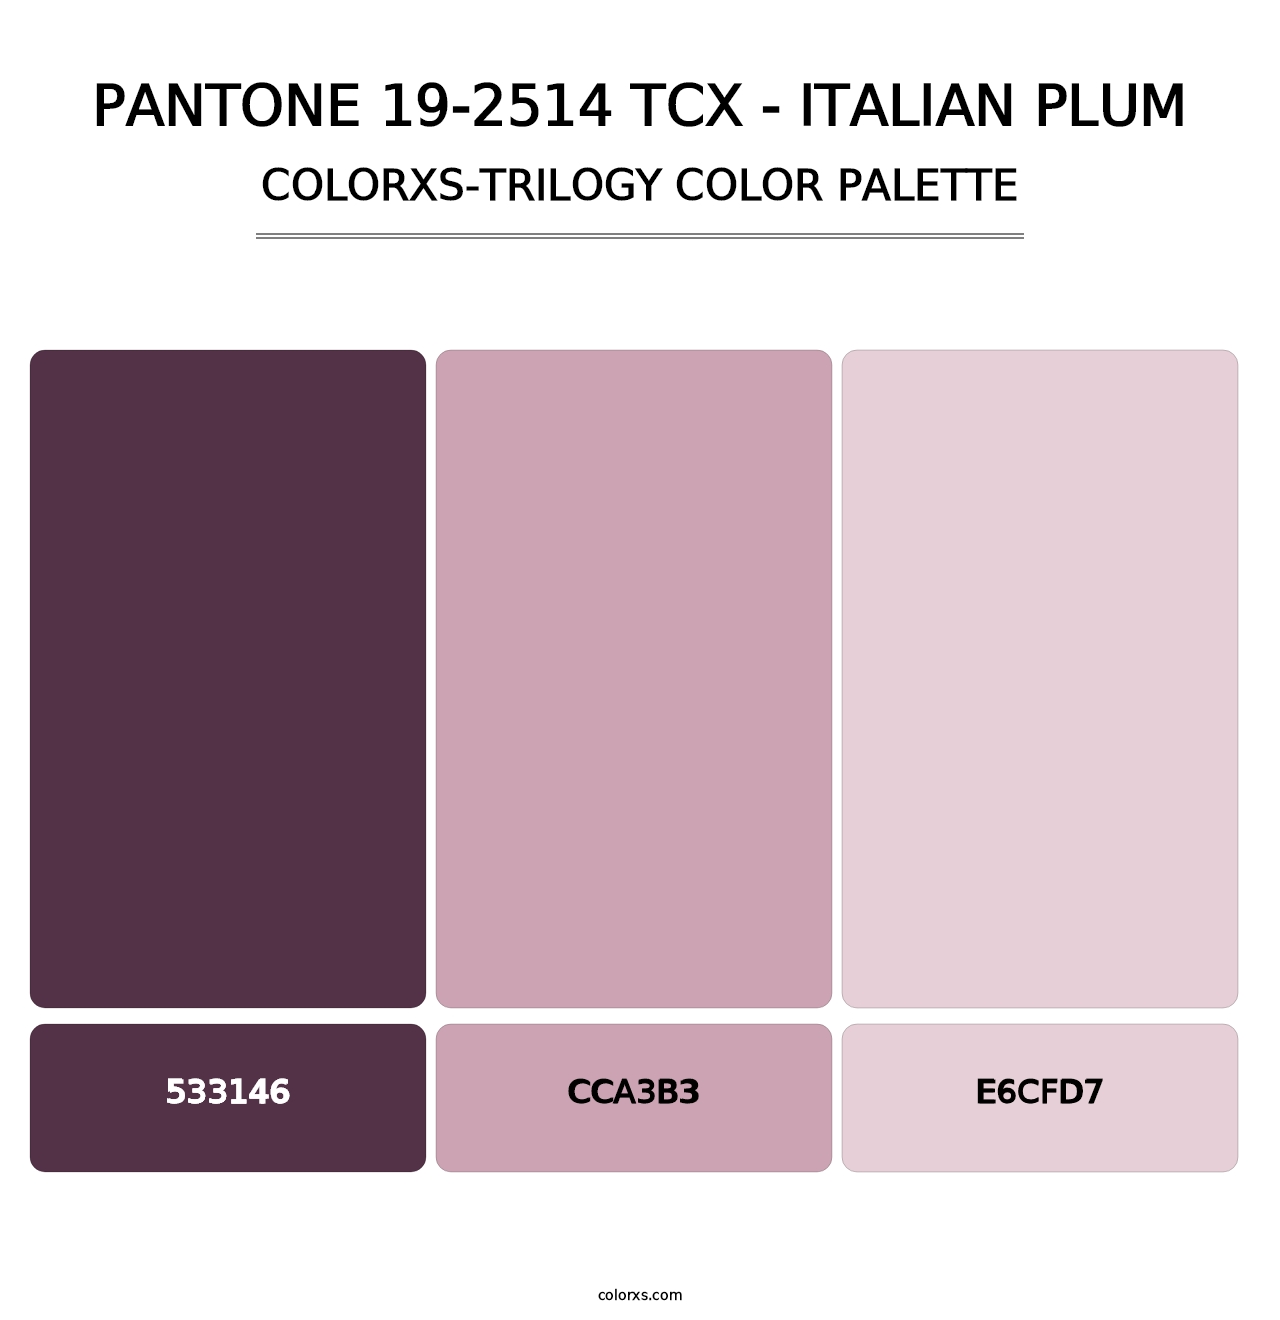 PANTONE 19-2514 TCX - Italian Plum - Colorxs Trilogy Palette